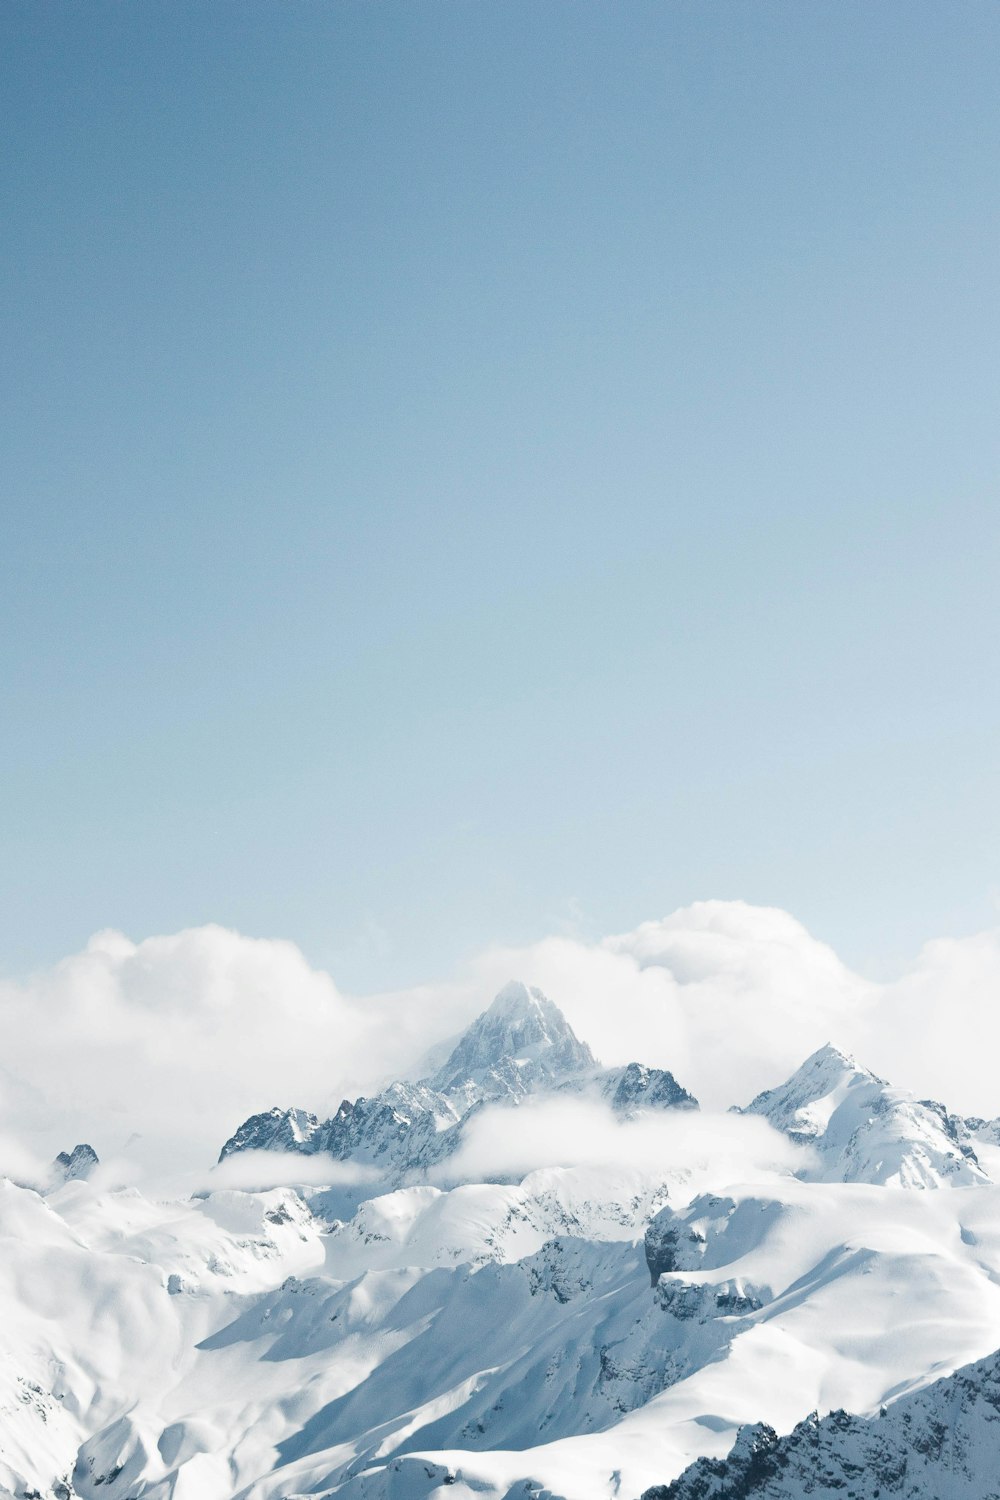 Schneebedeckter Berg unter blauem Himmel tagsüber